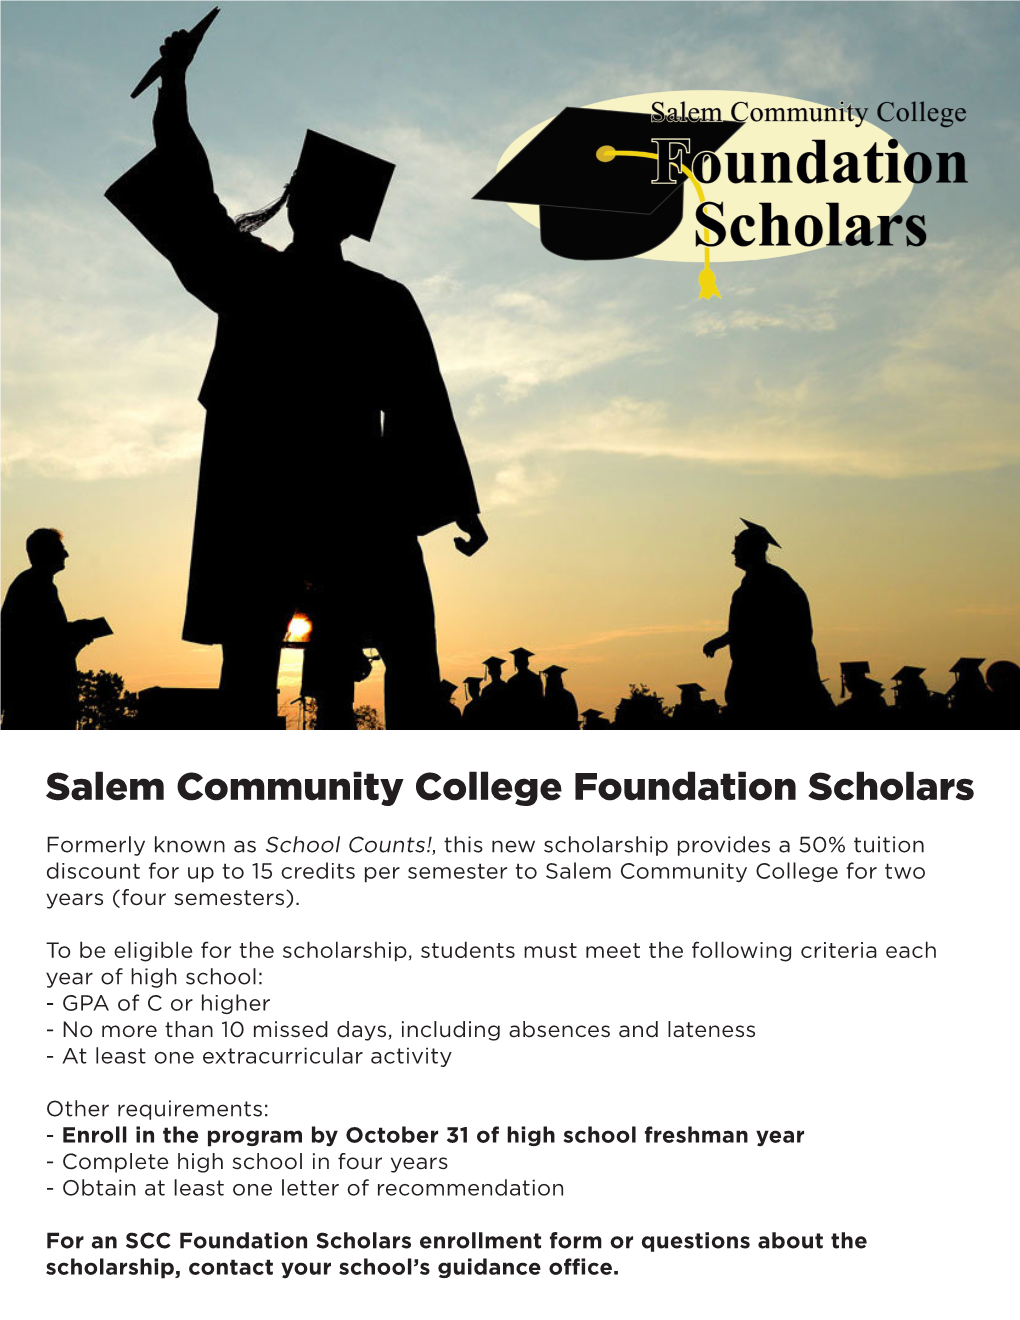 Salem Community College Foundation Scholars Program